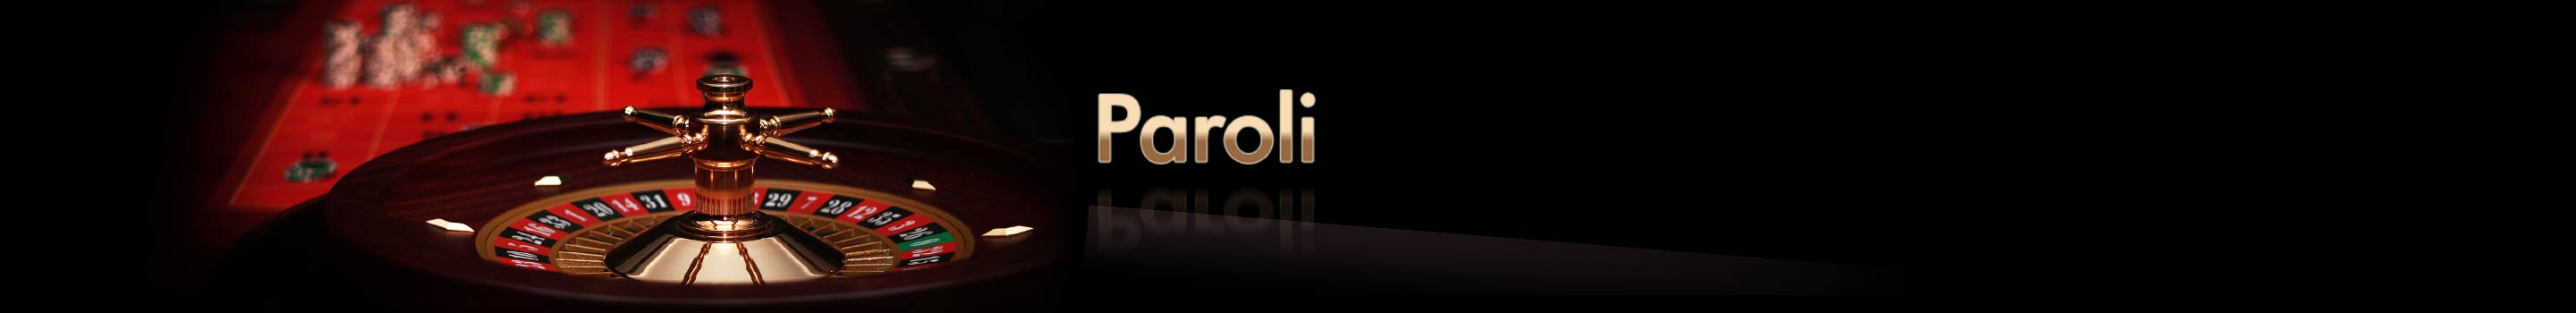 Paroli-systemet